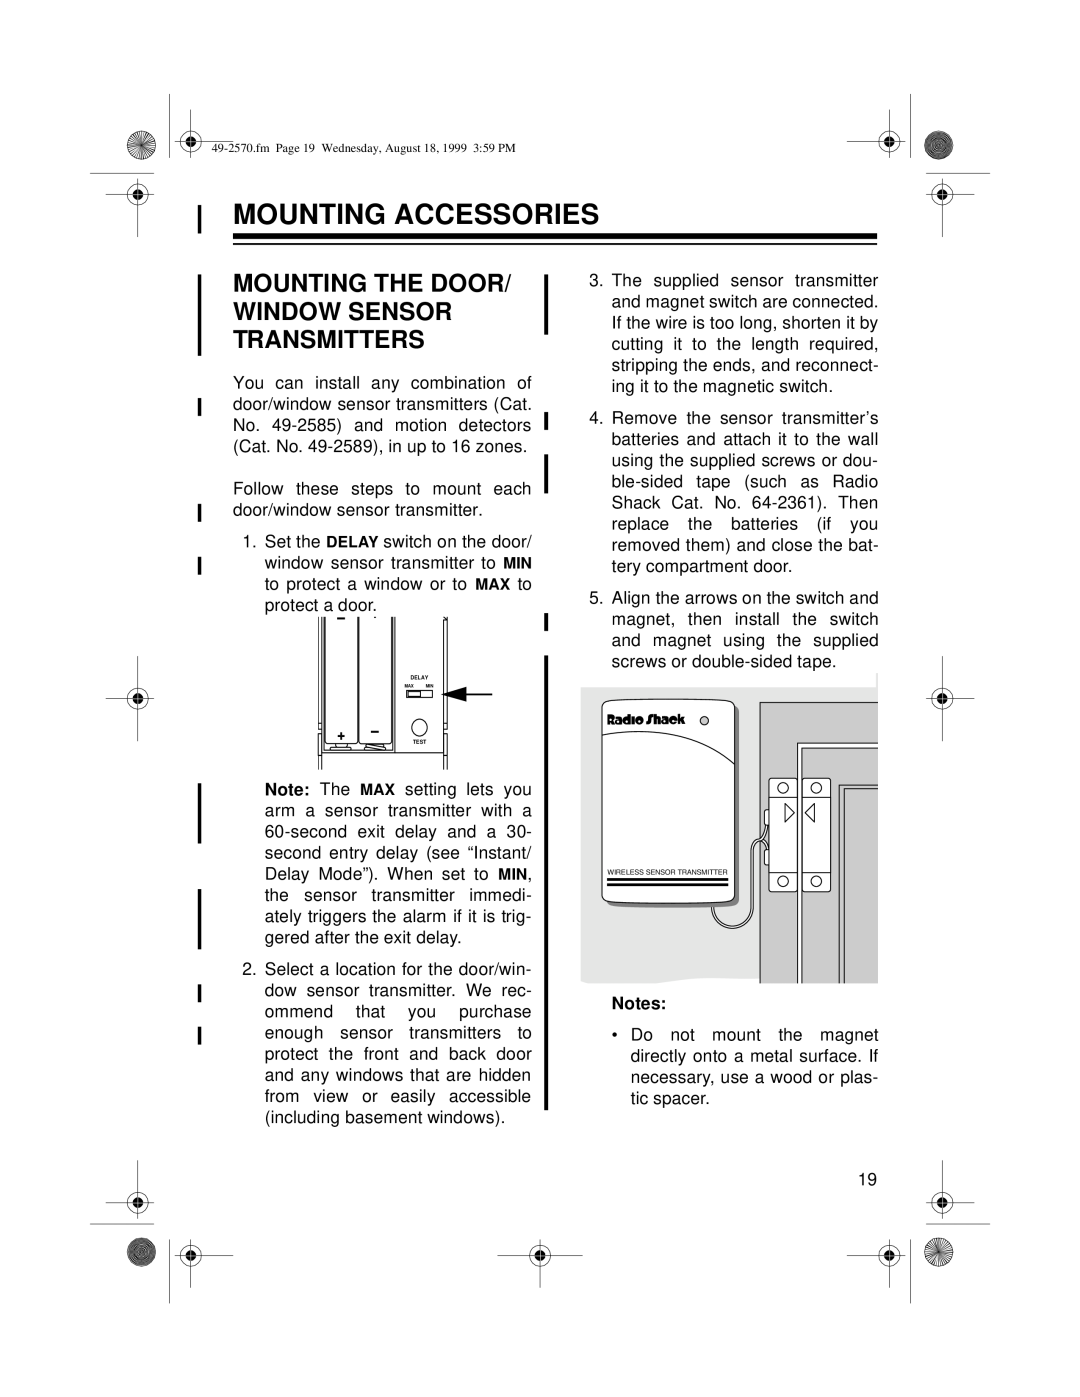 Radio Shack 49-2570 owner manual Mounting Accessories, Mounting The Door/ Window Sensor Transmitters 